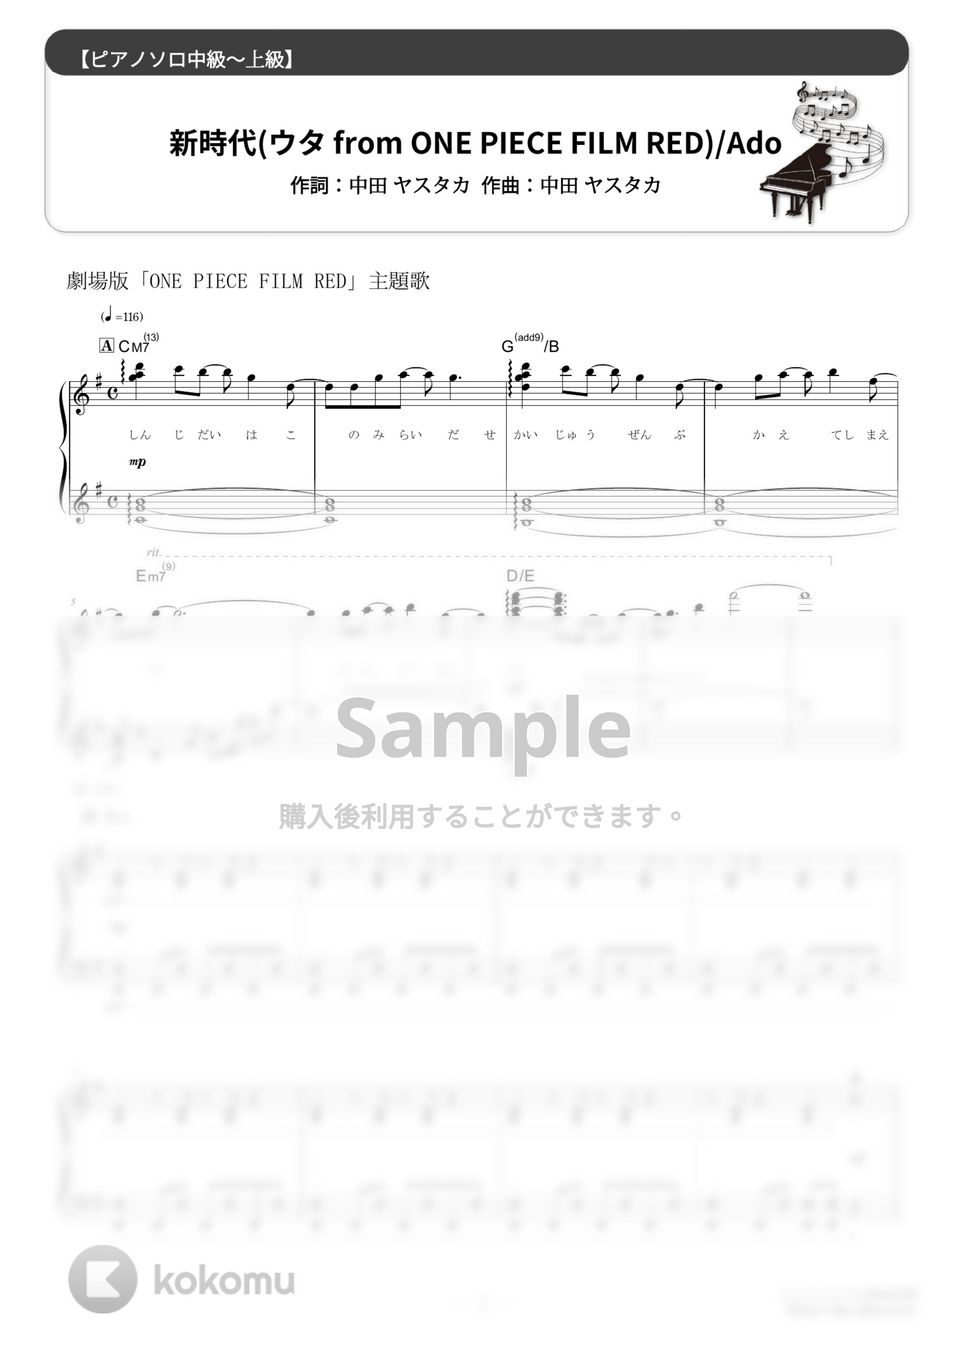 Ado - 新時代 (難易度:★★★★☆/映画『ONE PIECE FILM RED』主題歌) by Dさん